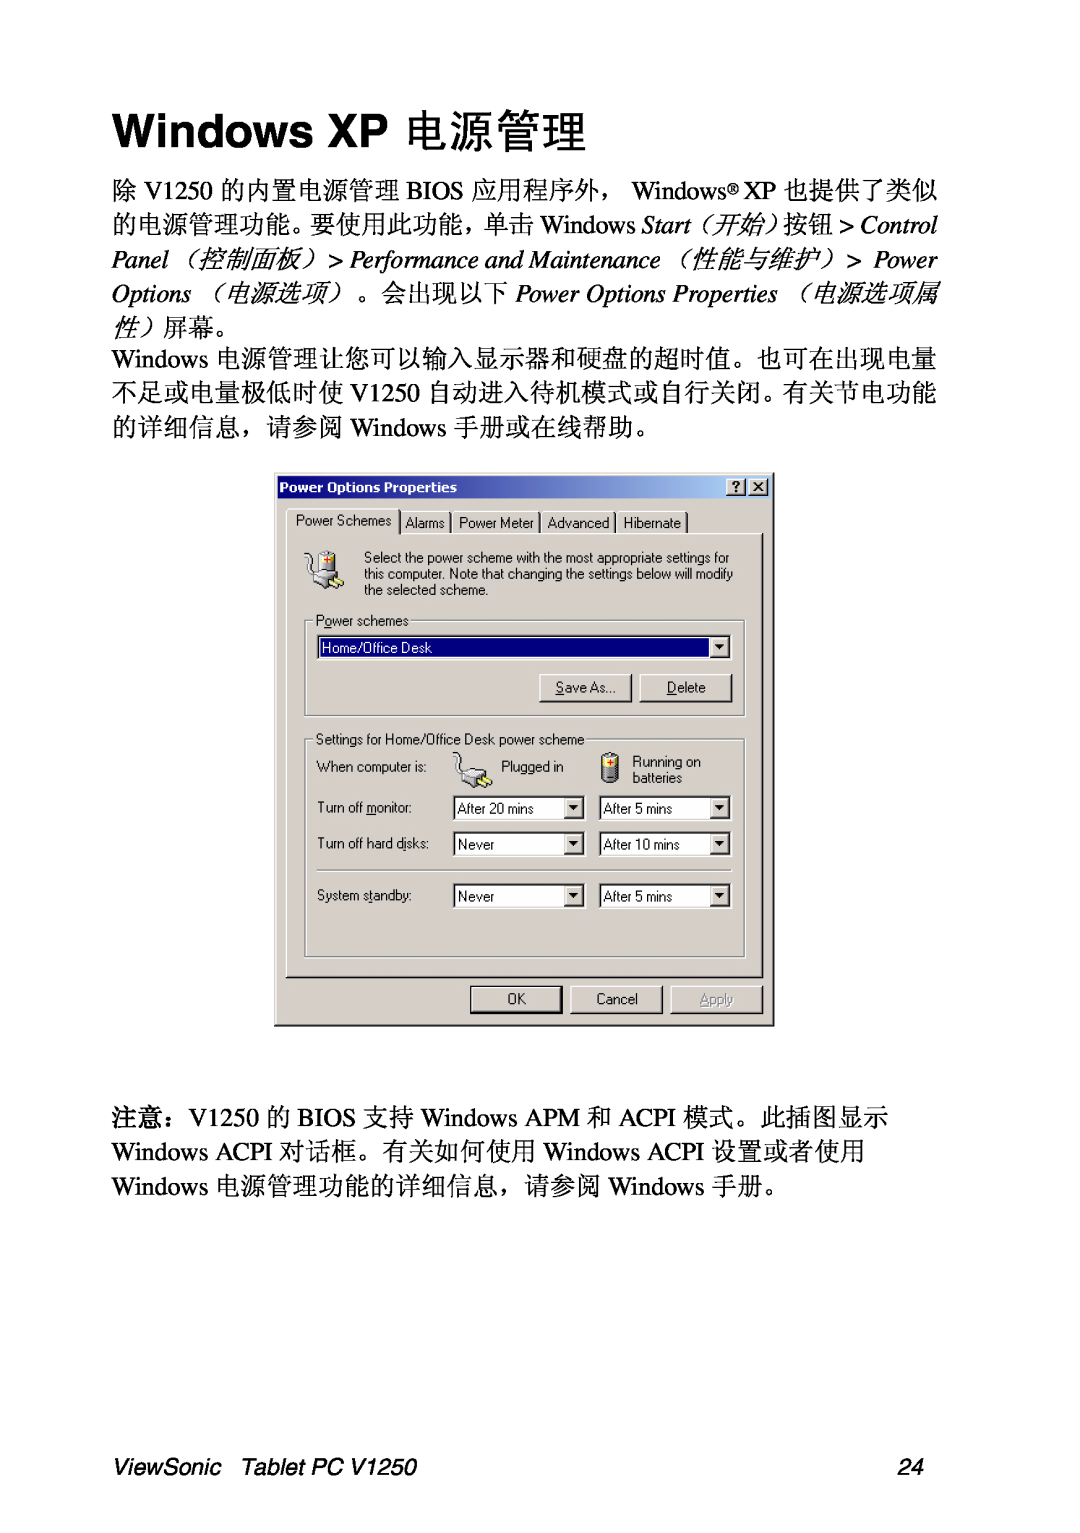 ViewSonic VSMW27922-1W manual Windows XP 